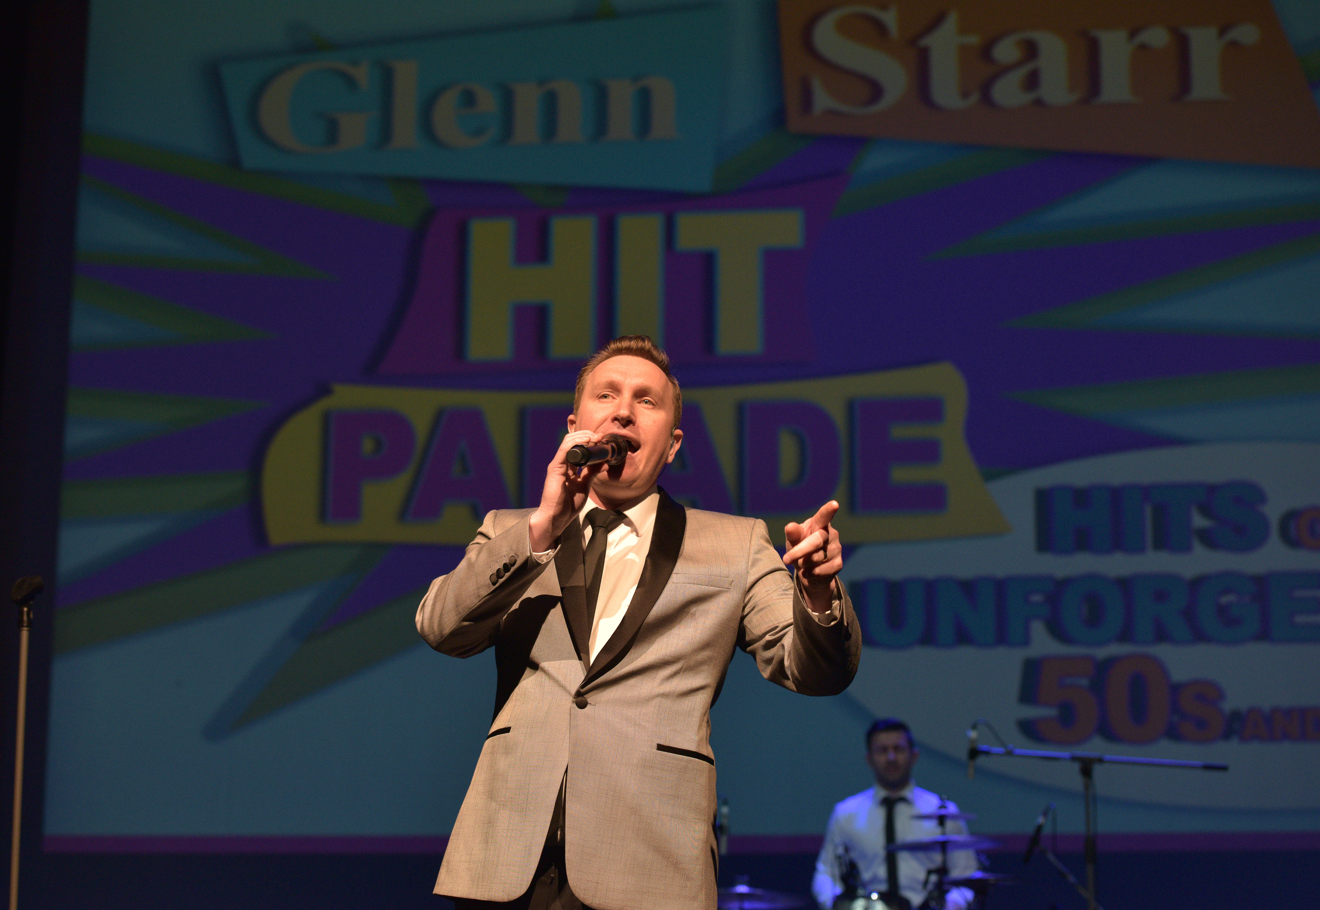 Glenn Starr Hit Parade @ SS&A!